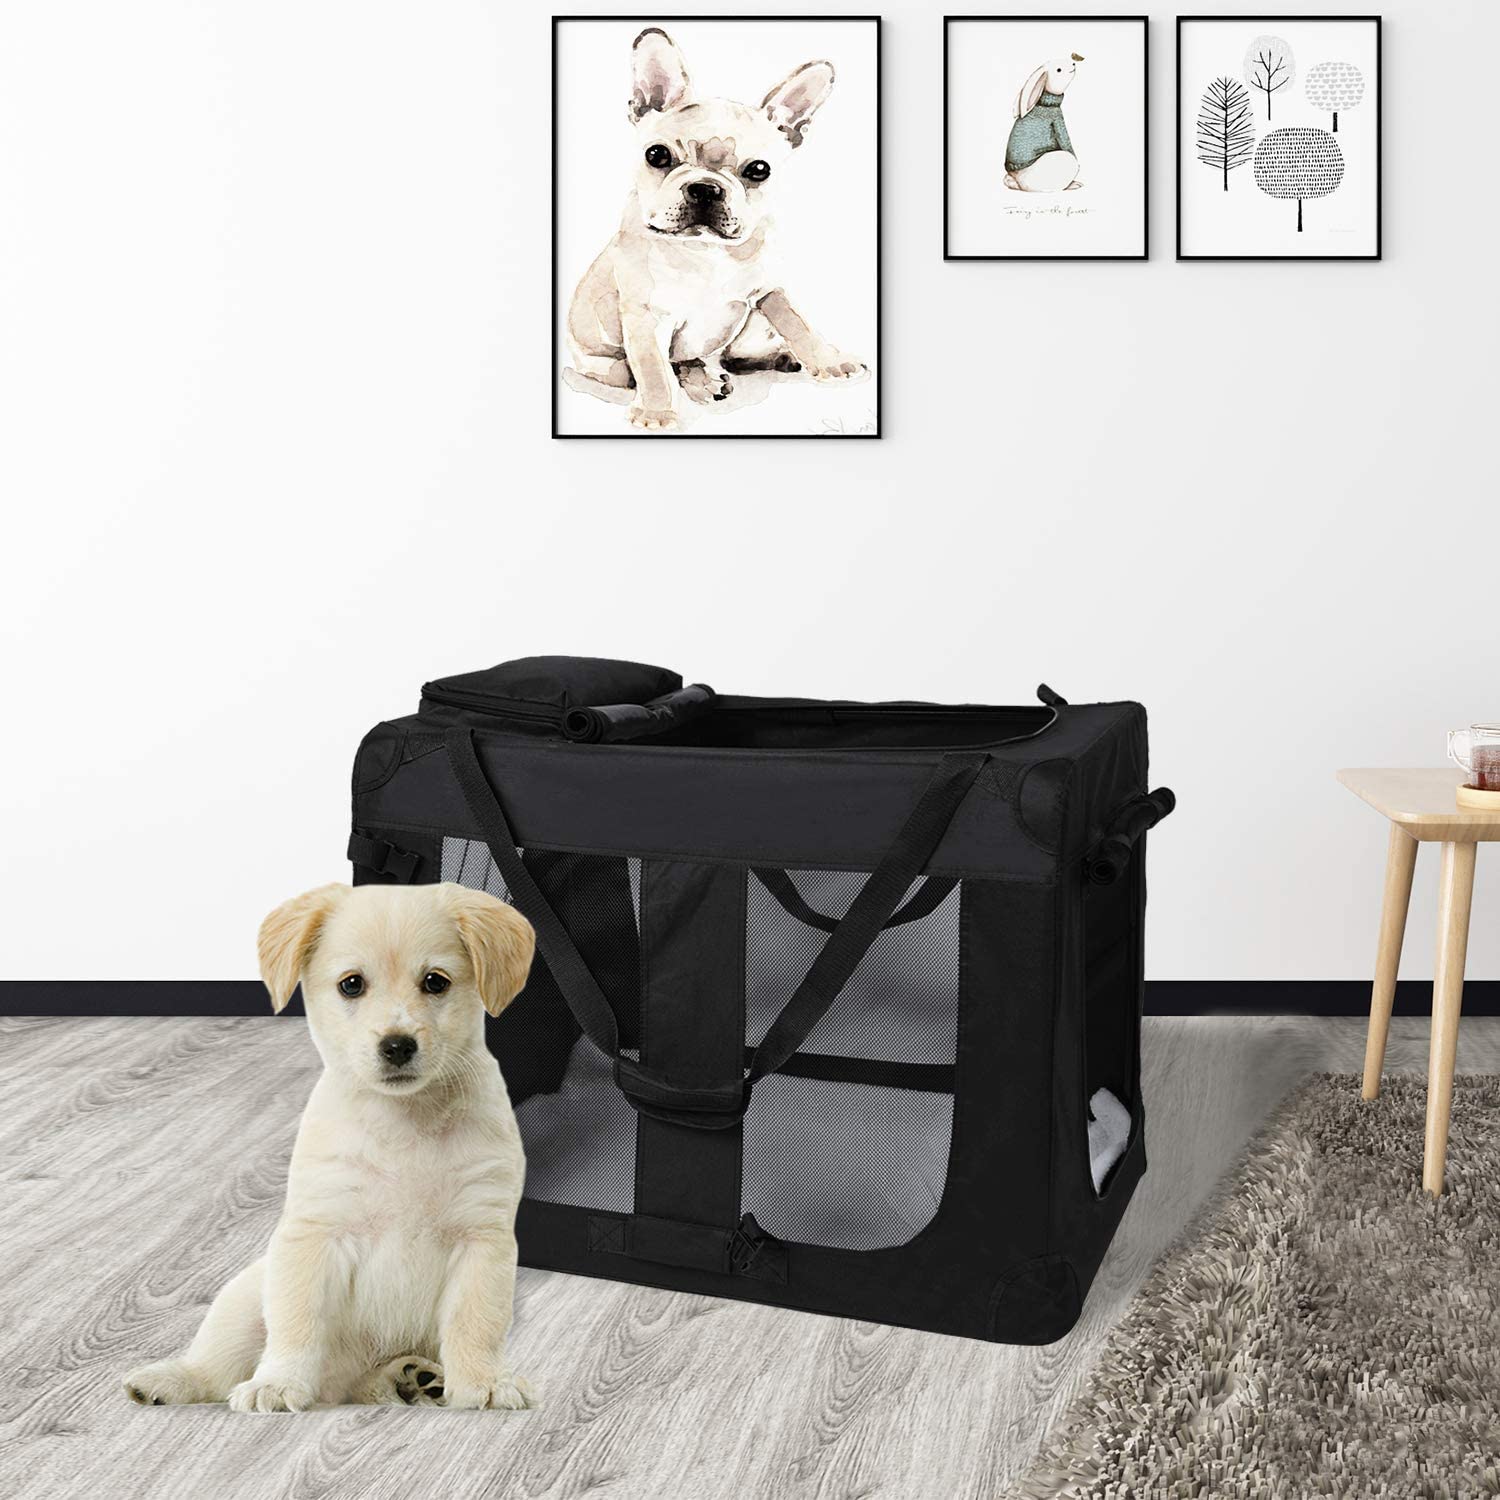  Mc Star Almohadas plegables lavables para perros Contenedores de transporte Perro Gato Animal doméstico Oxford con almohada Cordero Negro L 